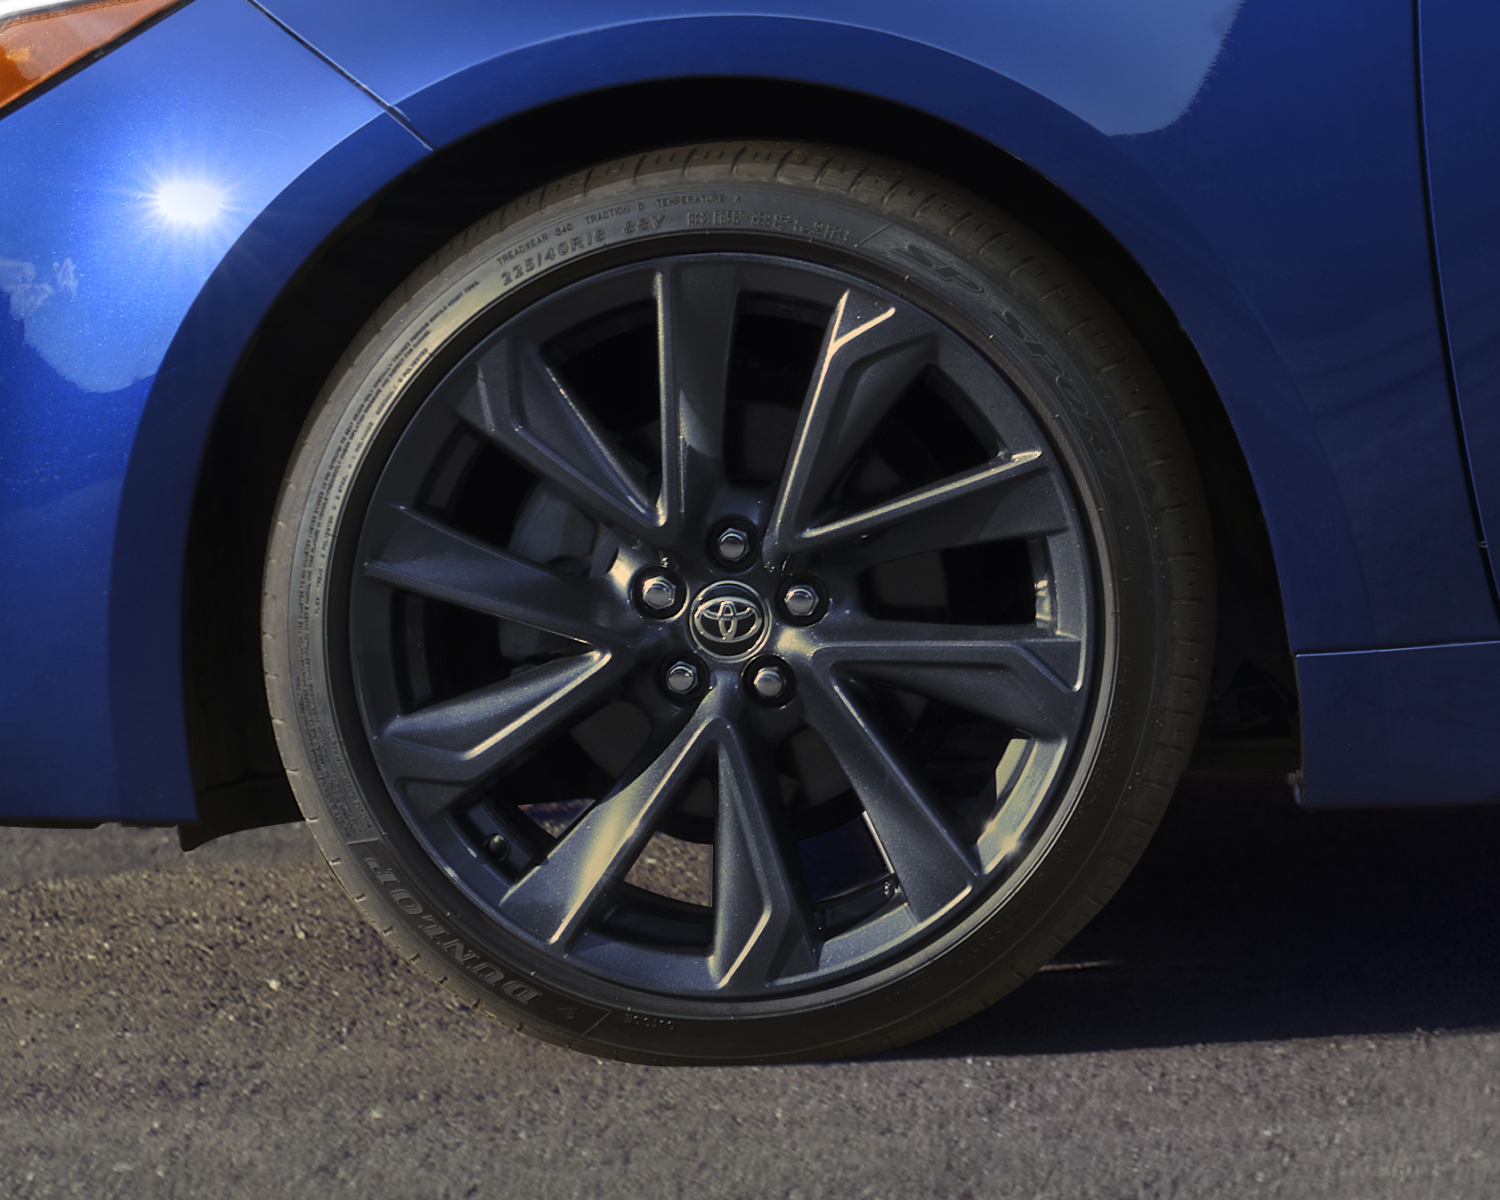 Corolla Hatchback 18” Alloy Wheel